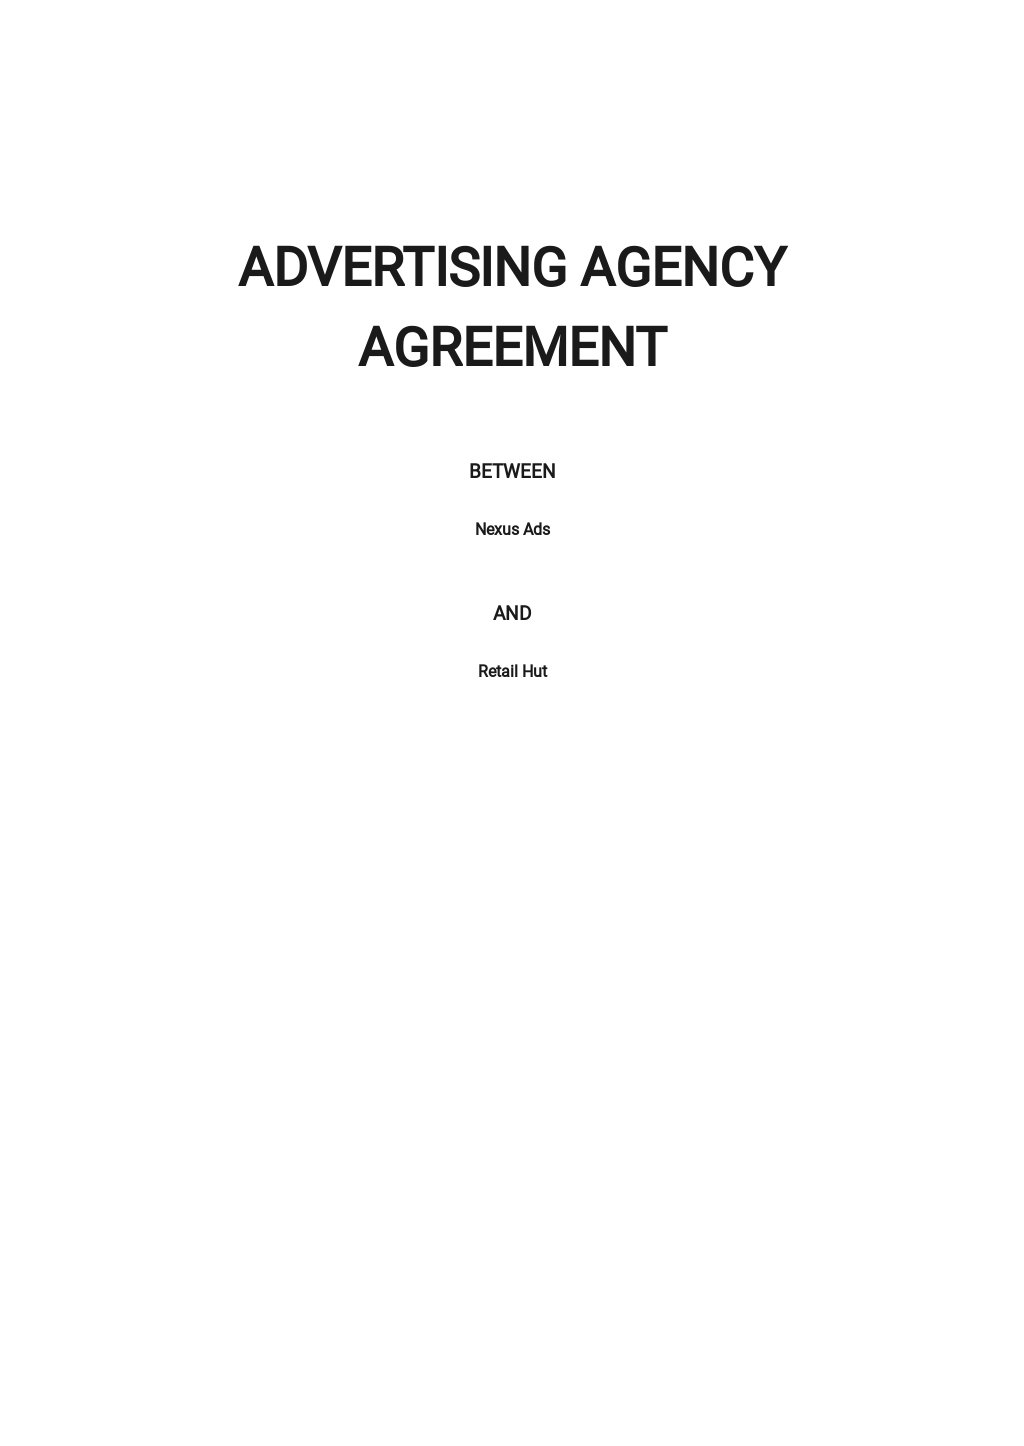 20+ FREE Advertising Agreement Templates [Edit & Download]